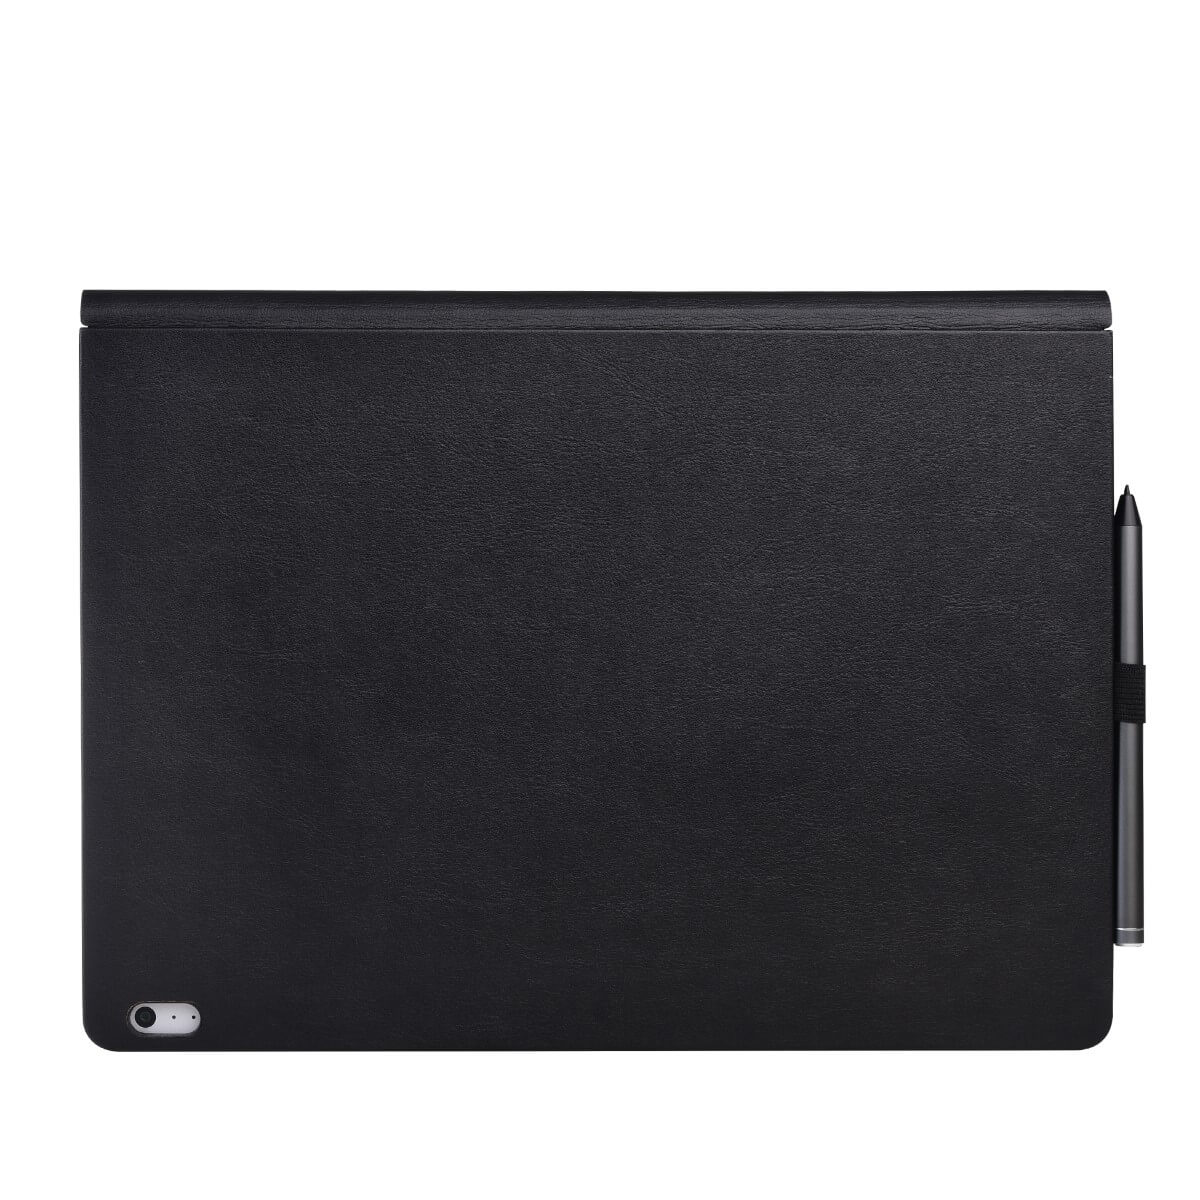 Microsoft Surface Book 3 13.5-inch foldable flip leather case_13,5-Zoll faltbare Flip Ledertasche_back side image